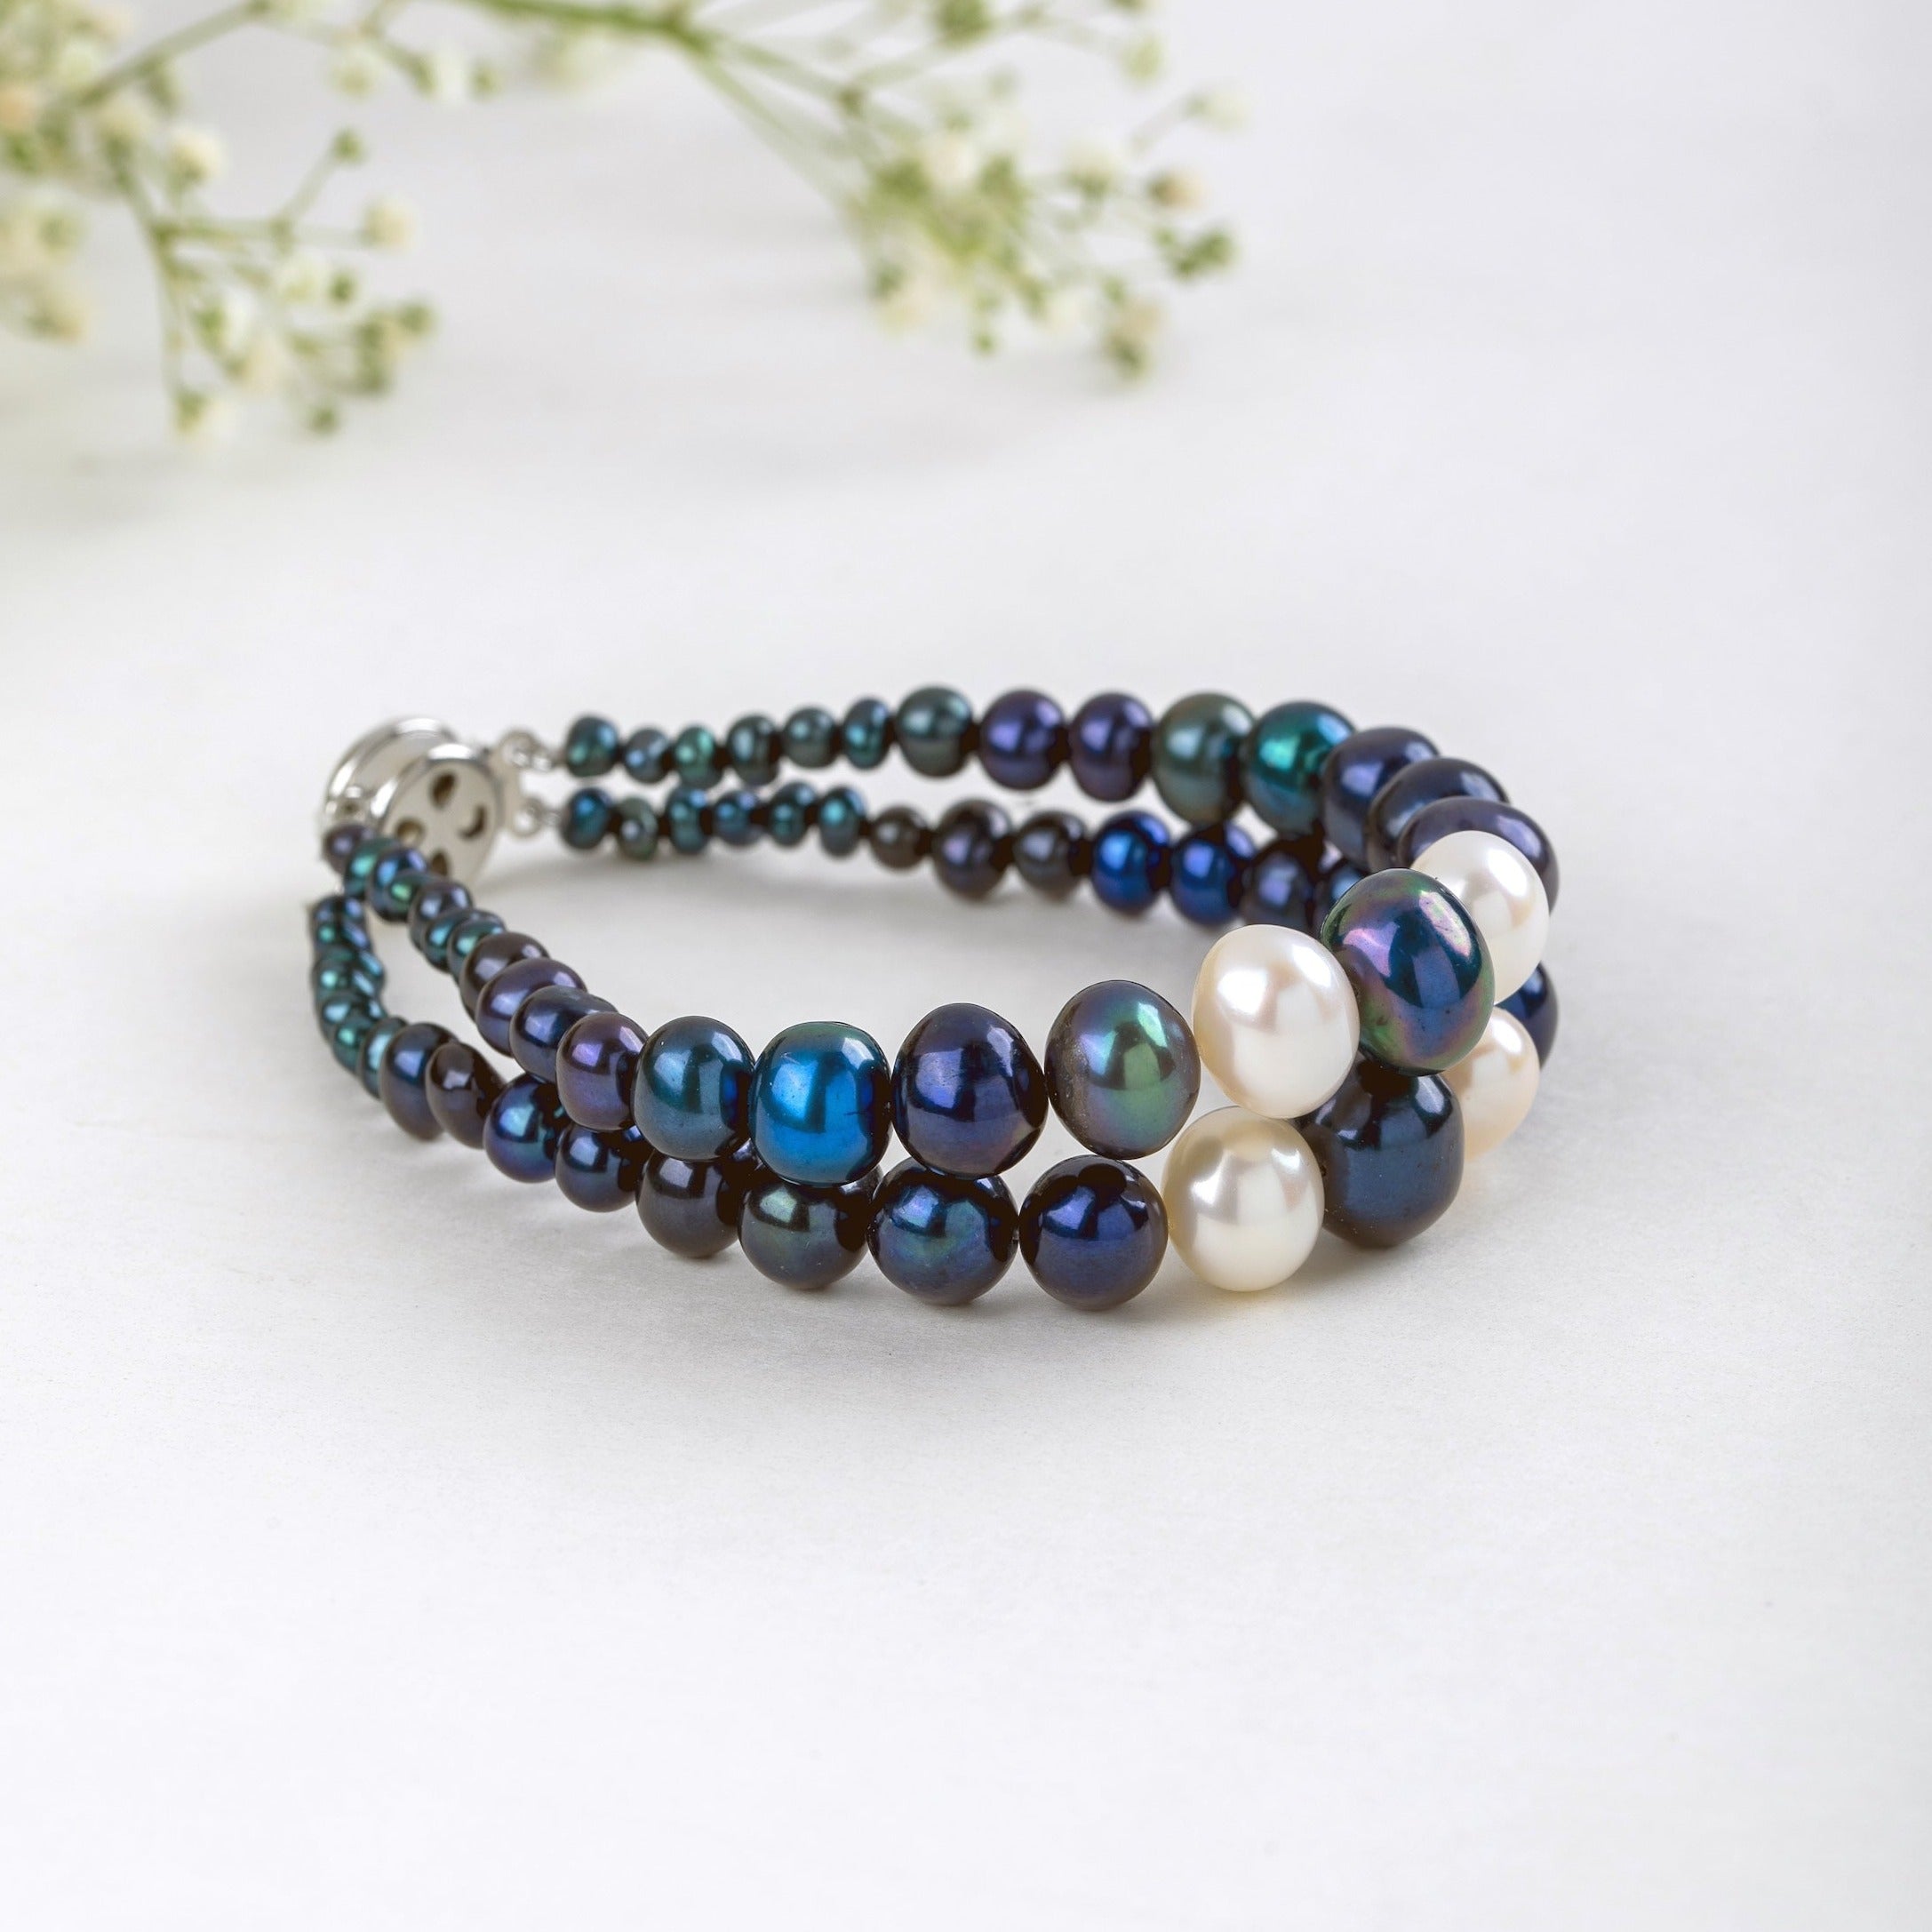 Night Blue and White Bracelet